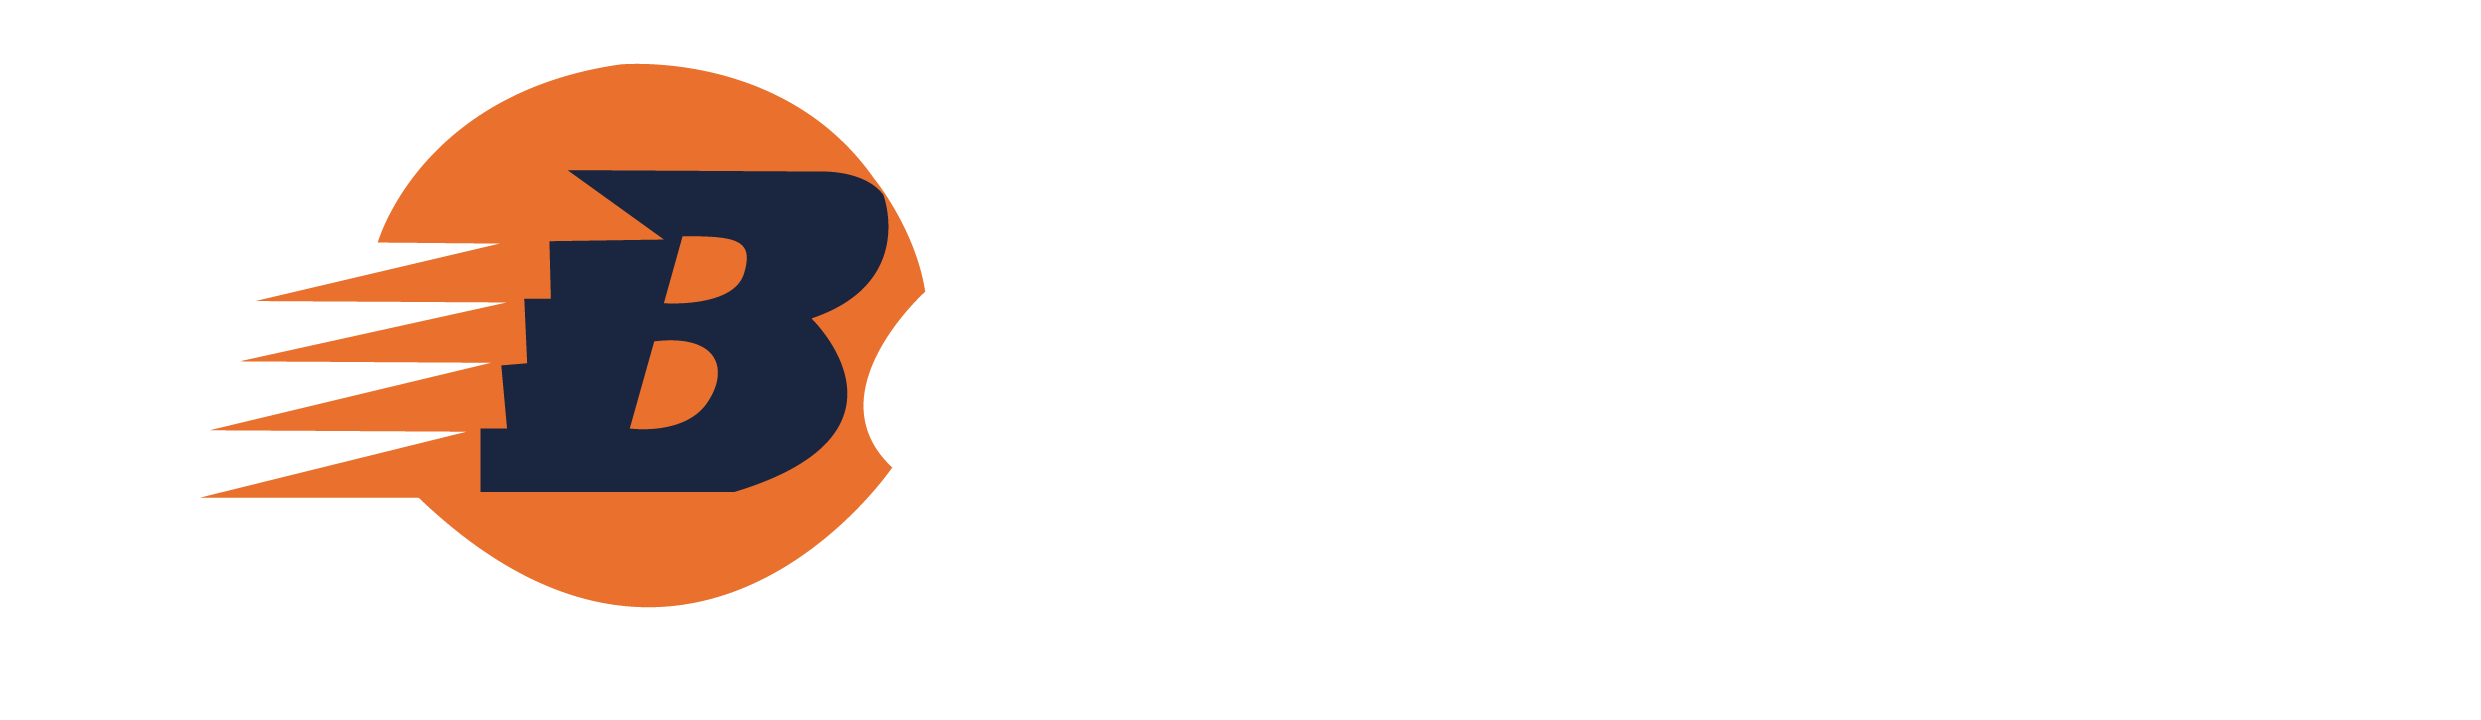 Beacon Power Systems